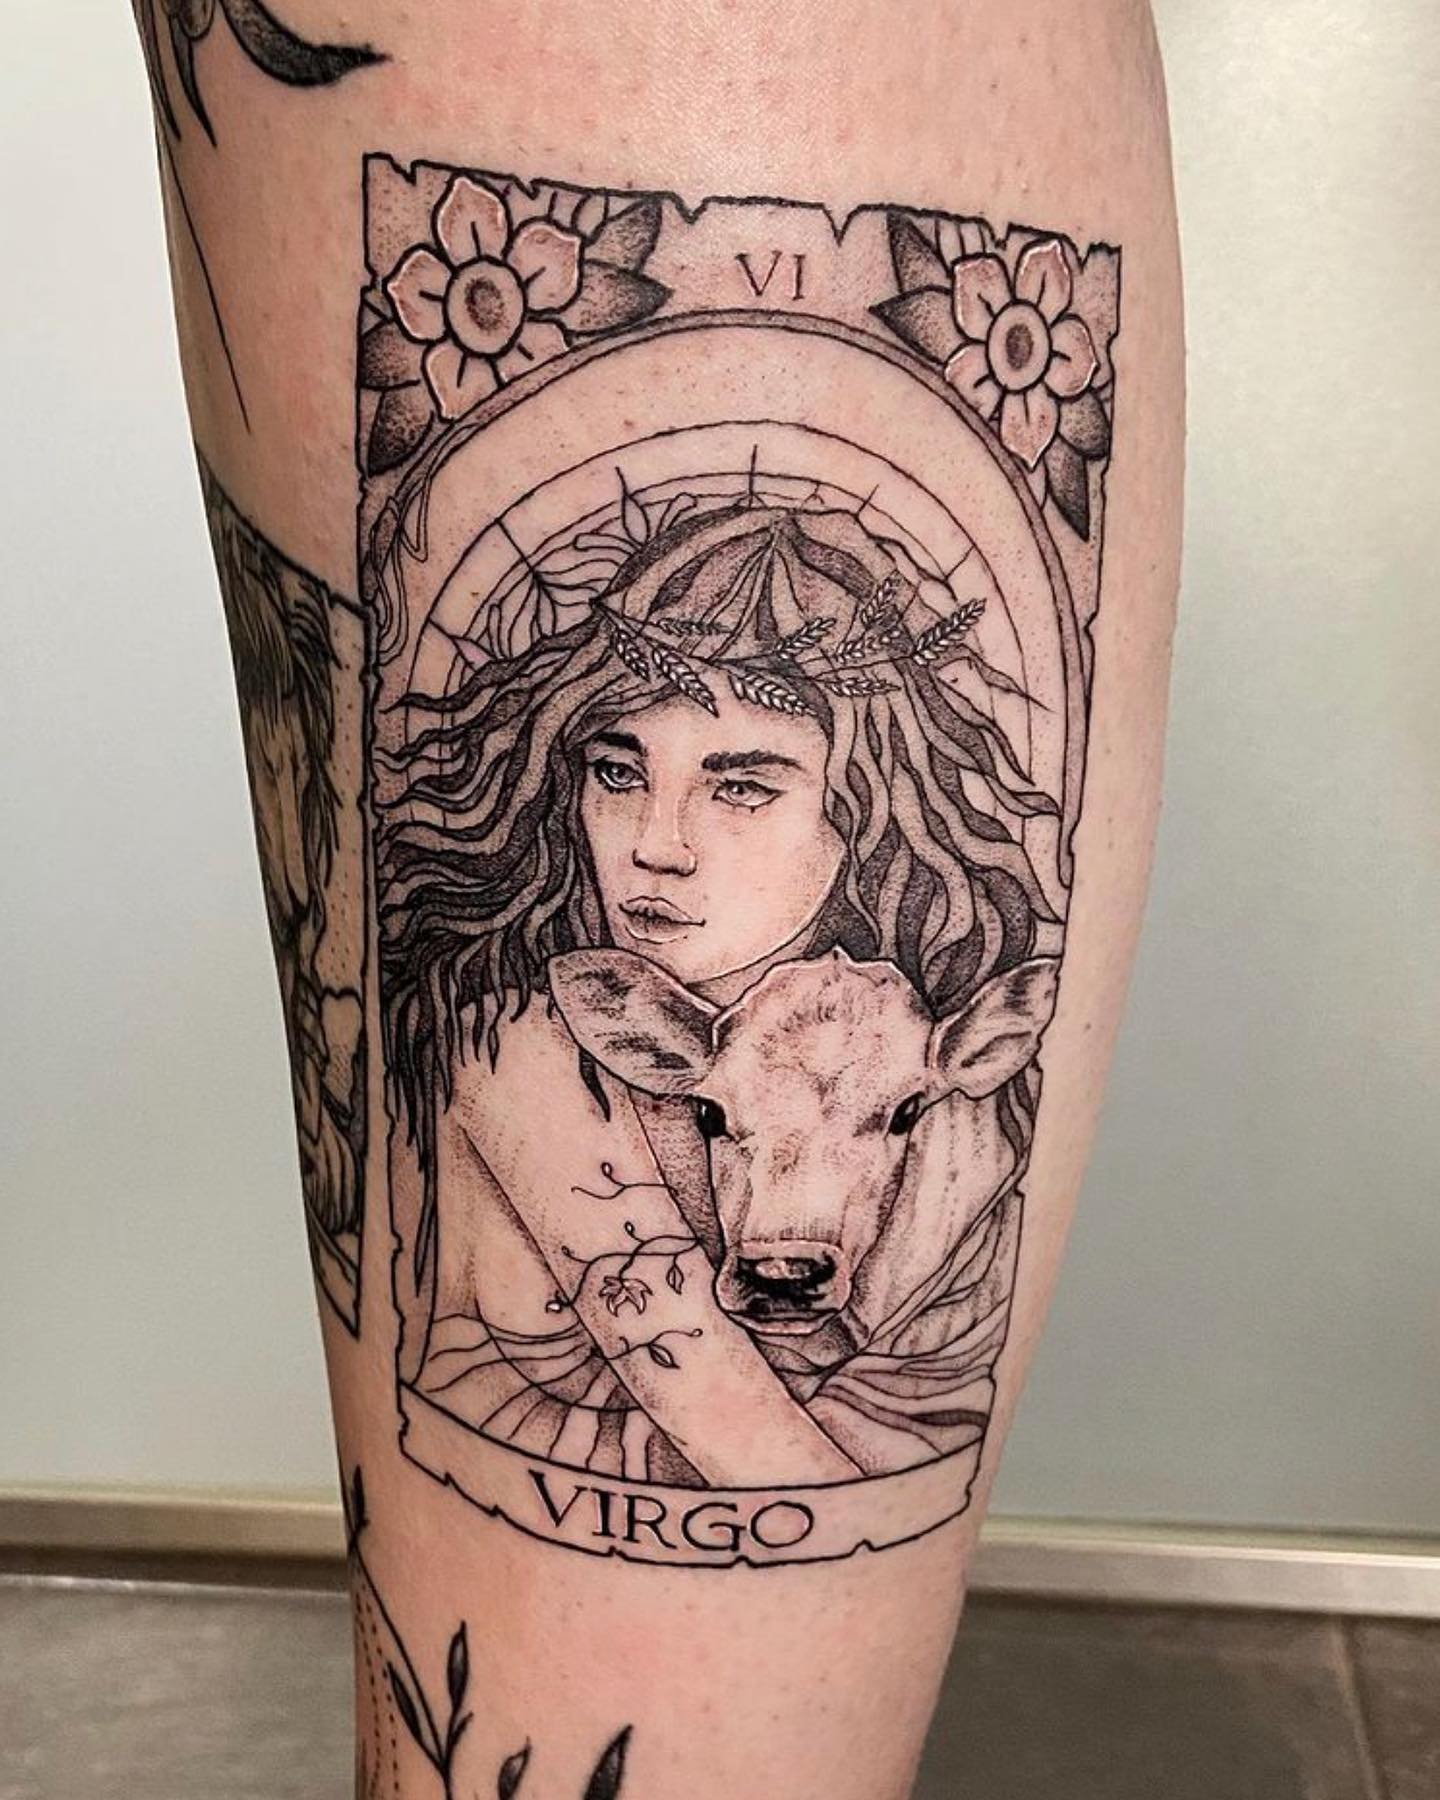 Virgo Tarot Card Tattoo